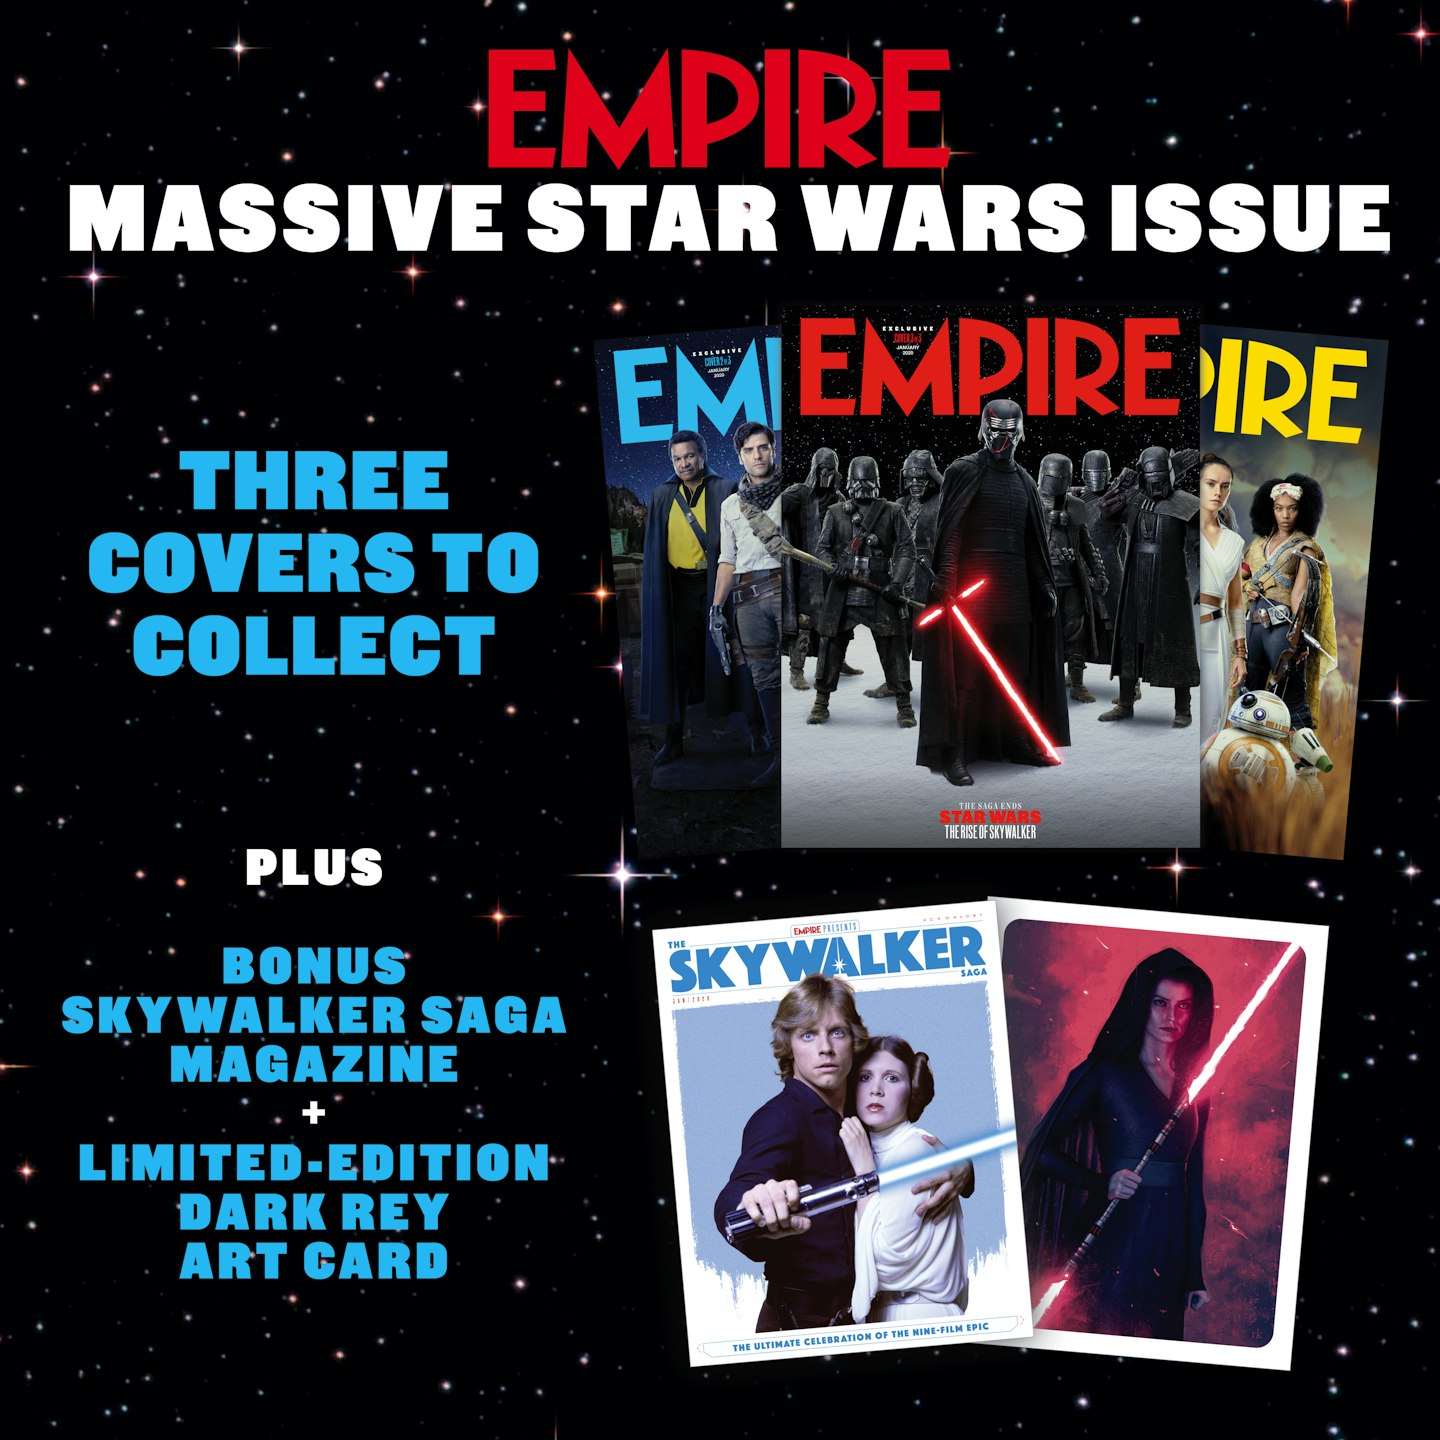 Star Wars Rise Of Skywalker issue package